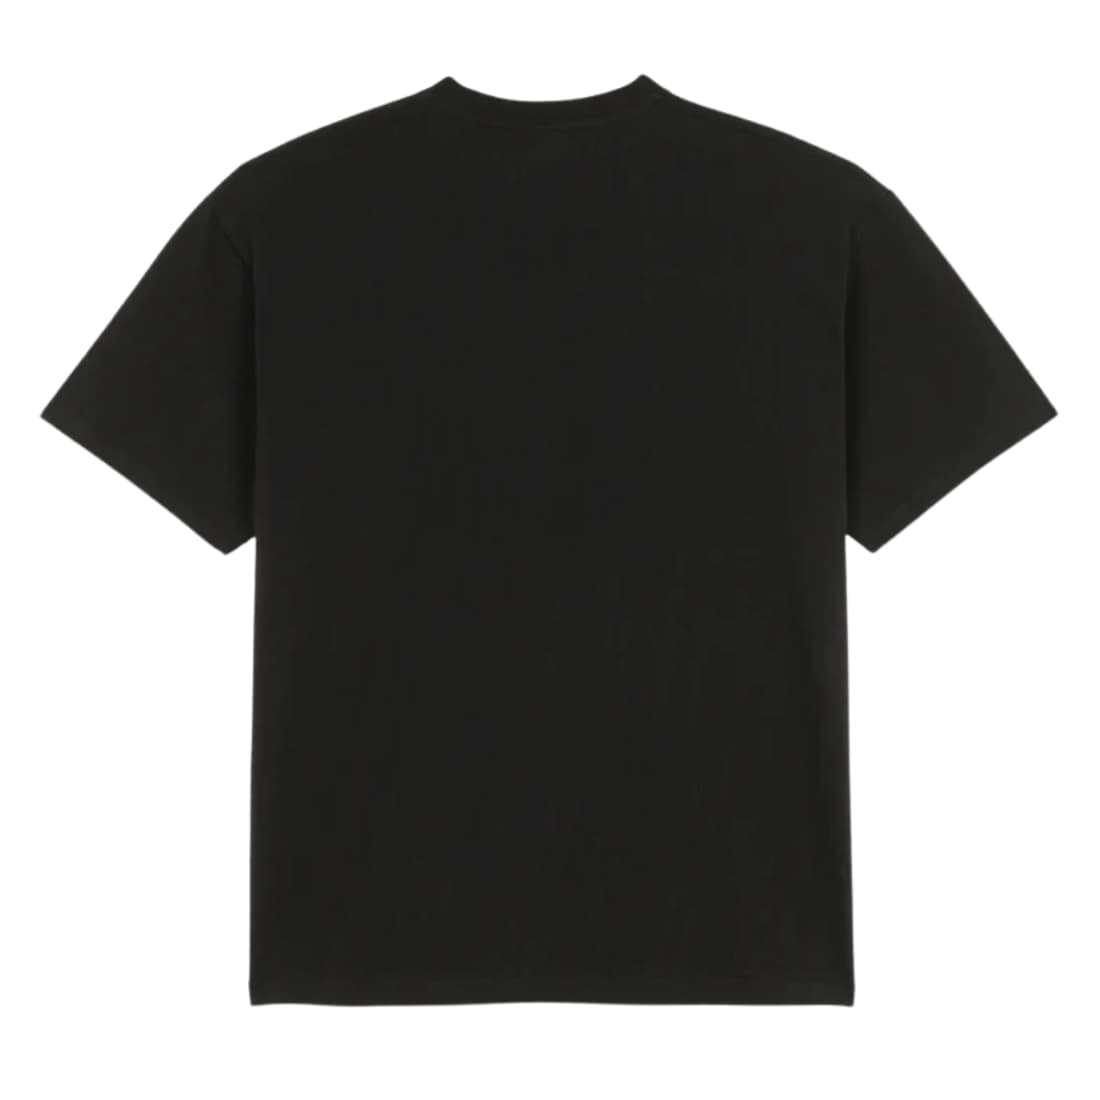 Polar Graph T-Shirt - Black - Mens Graphic T-Shirt by Polar